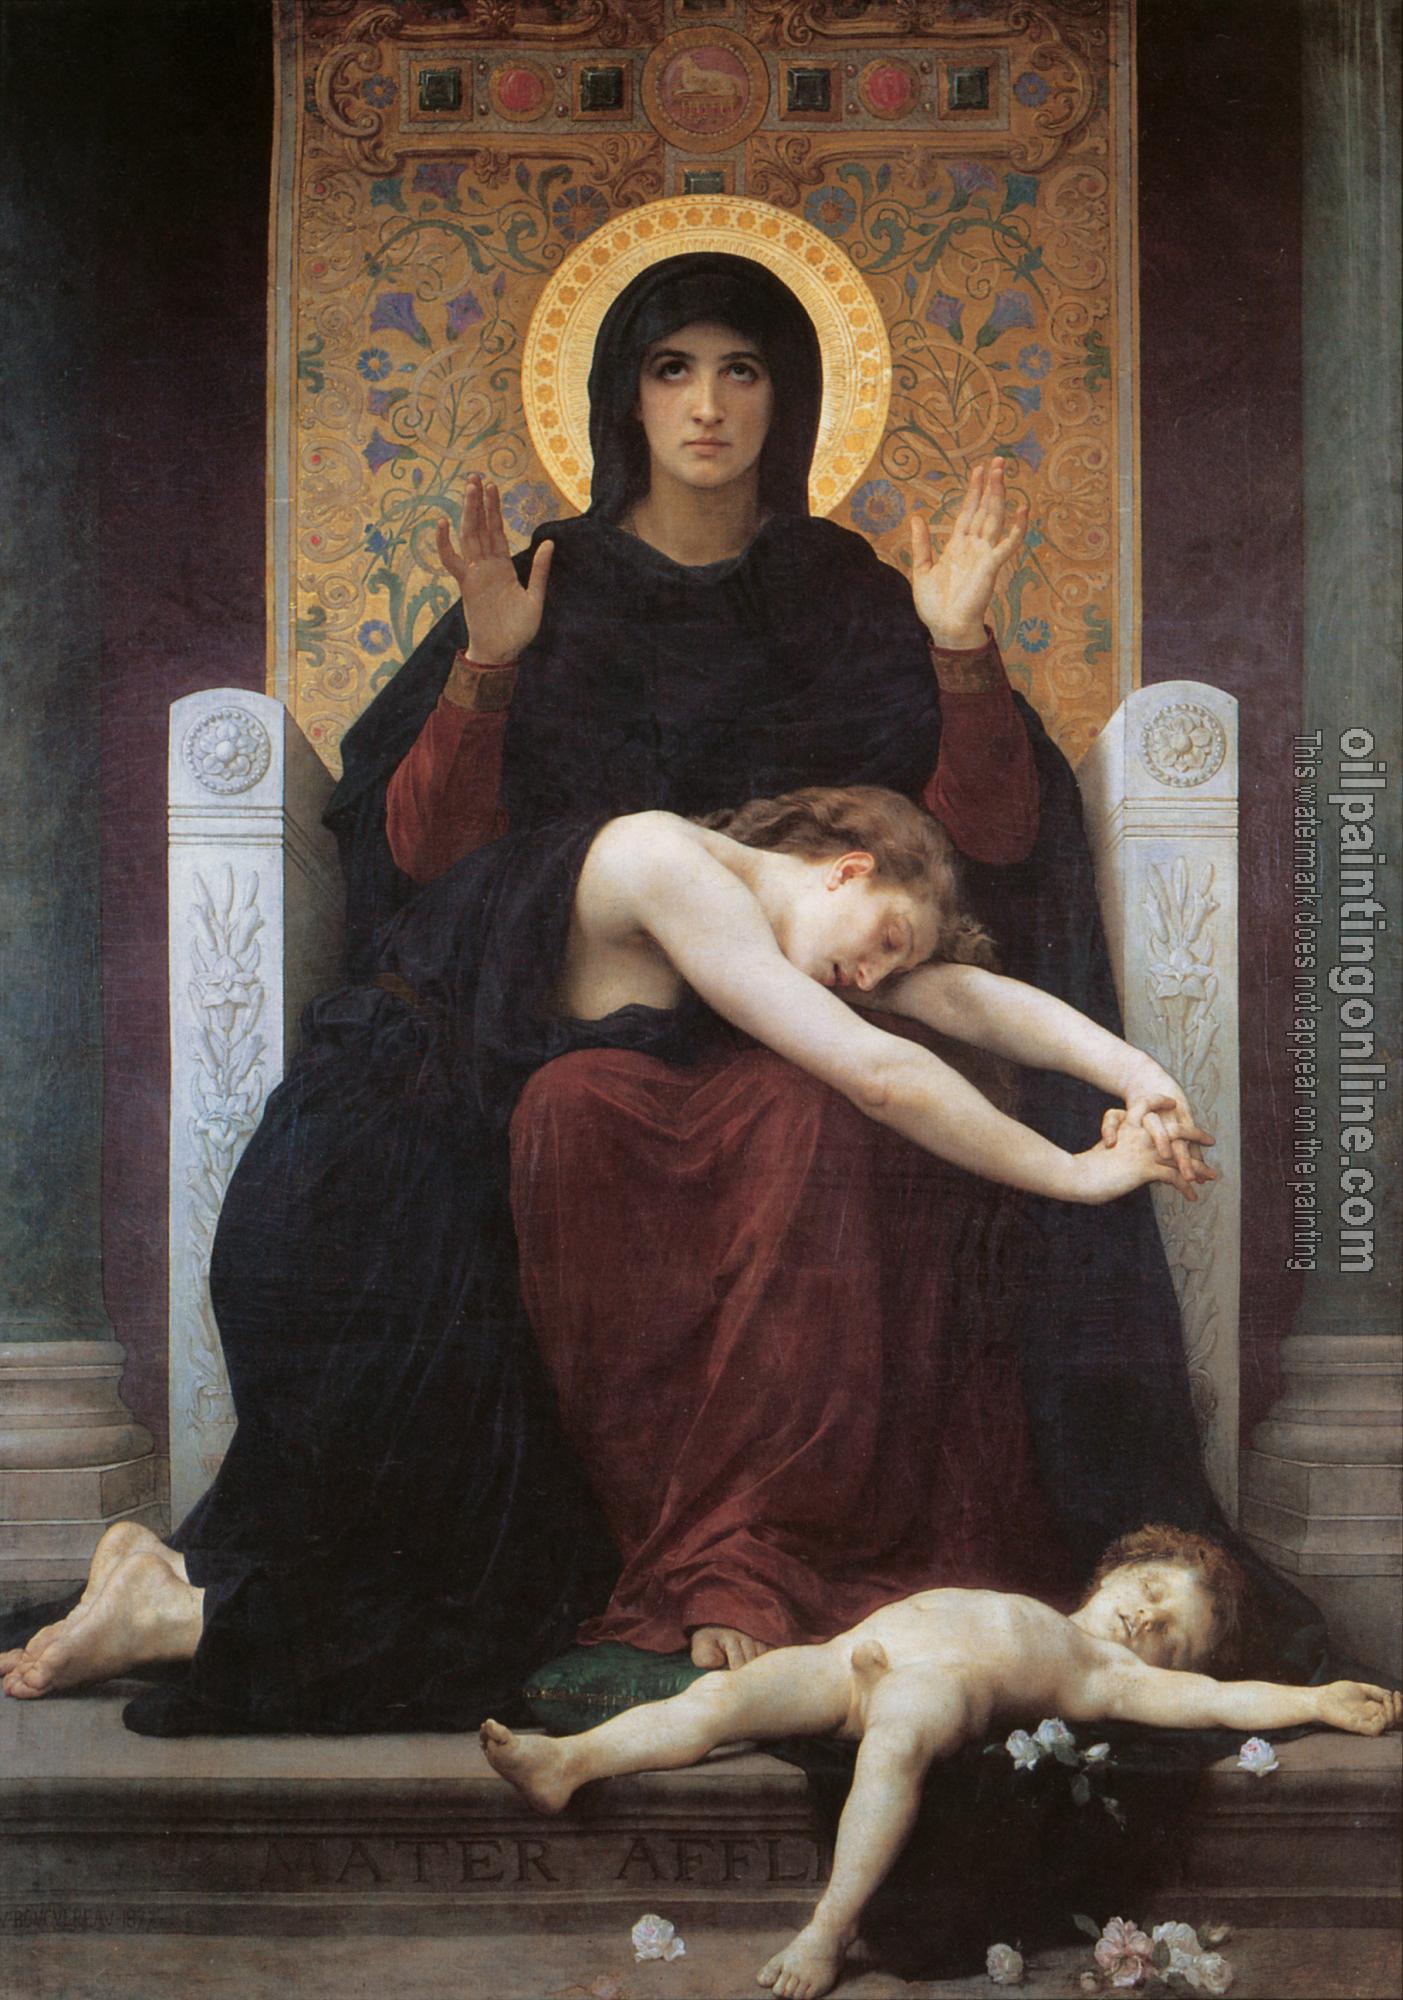 Bouguereau, William-Adolphe - Vierge Consolatrice( The Virgin of Consolation)